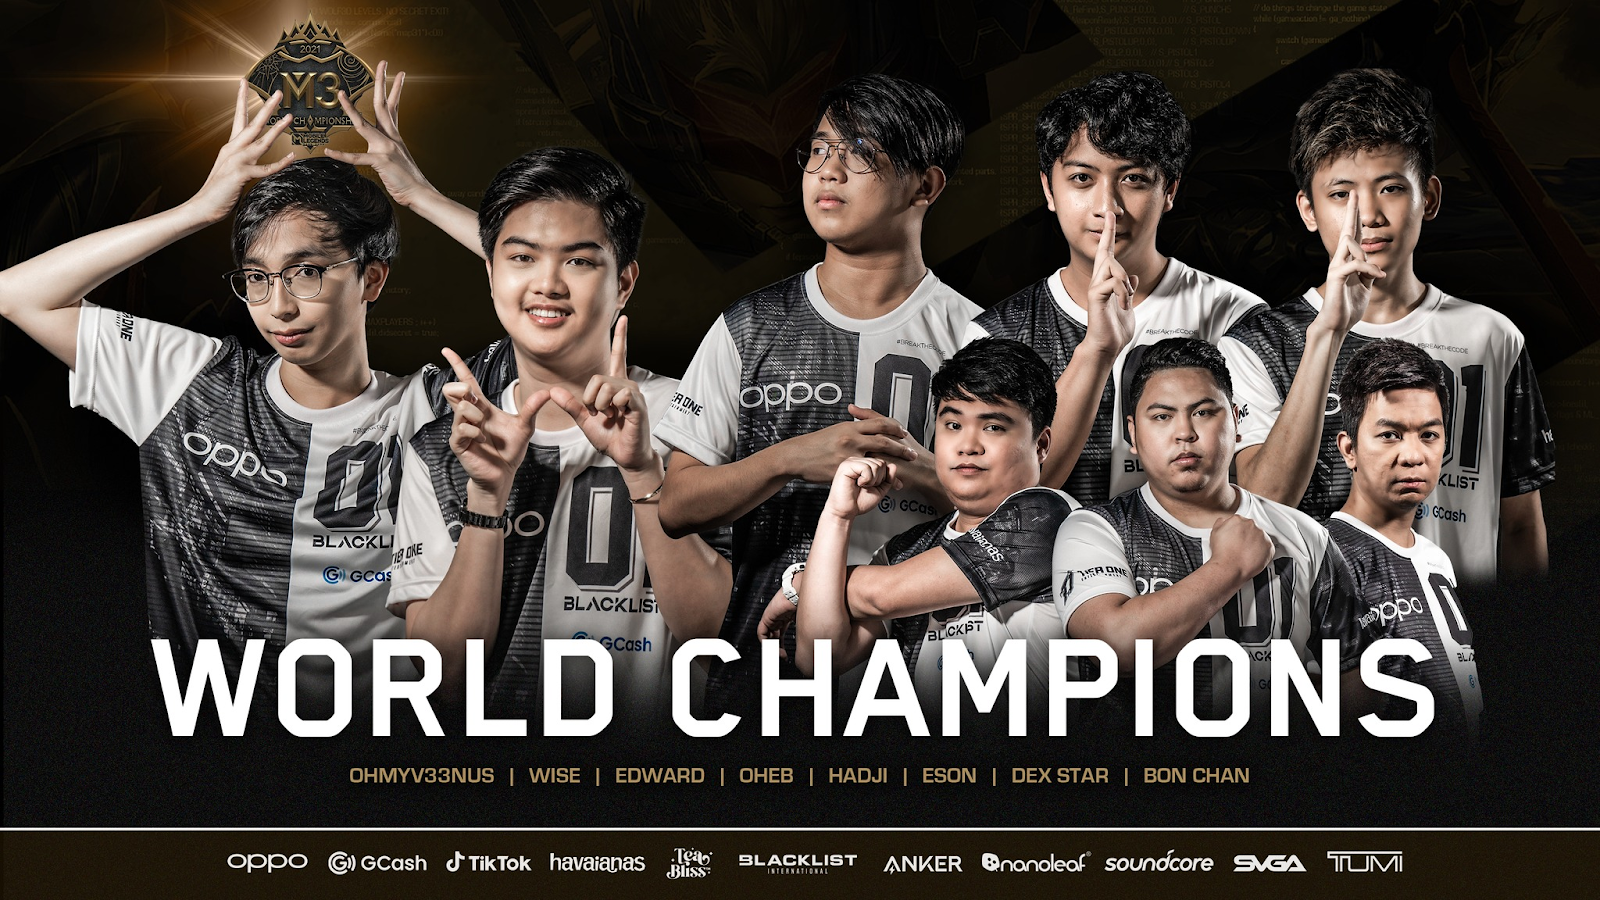 Blacklist International Wins M3 World Championship